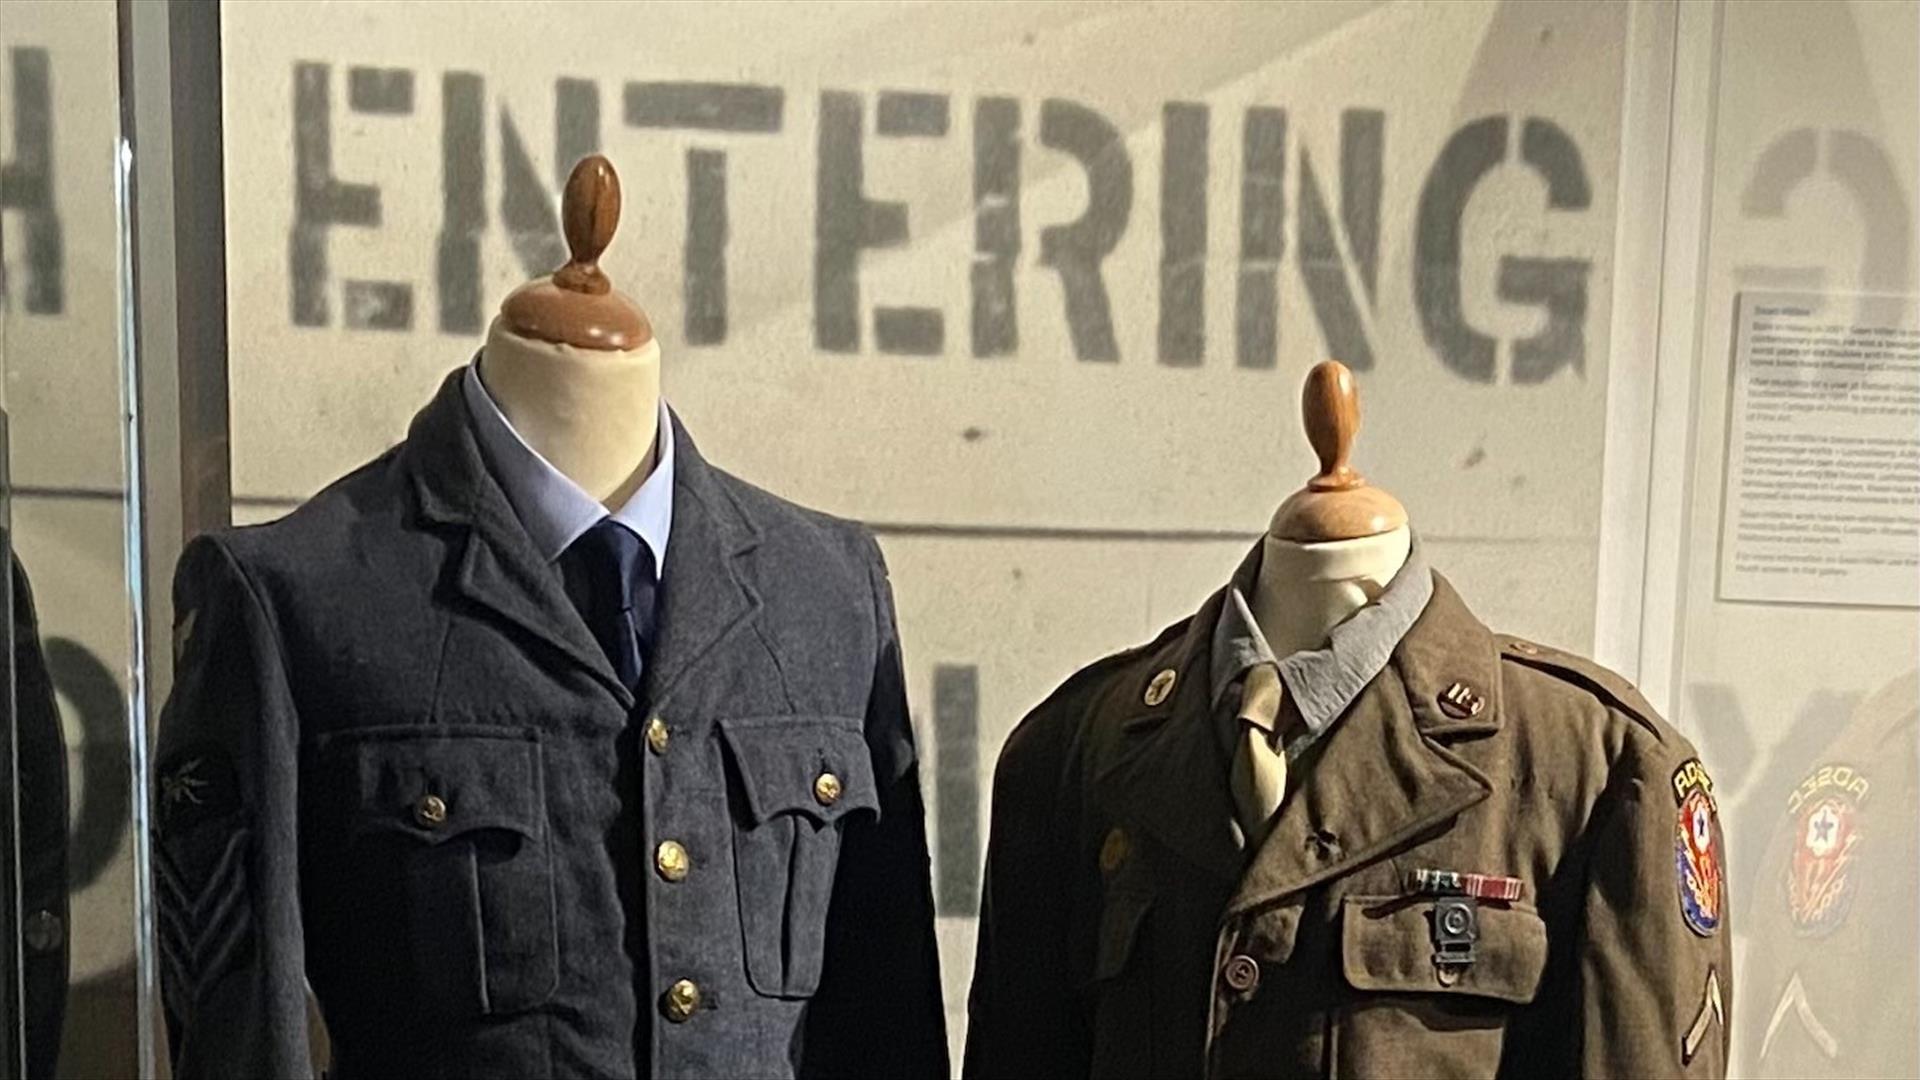 World War Two uniforms on display